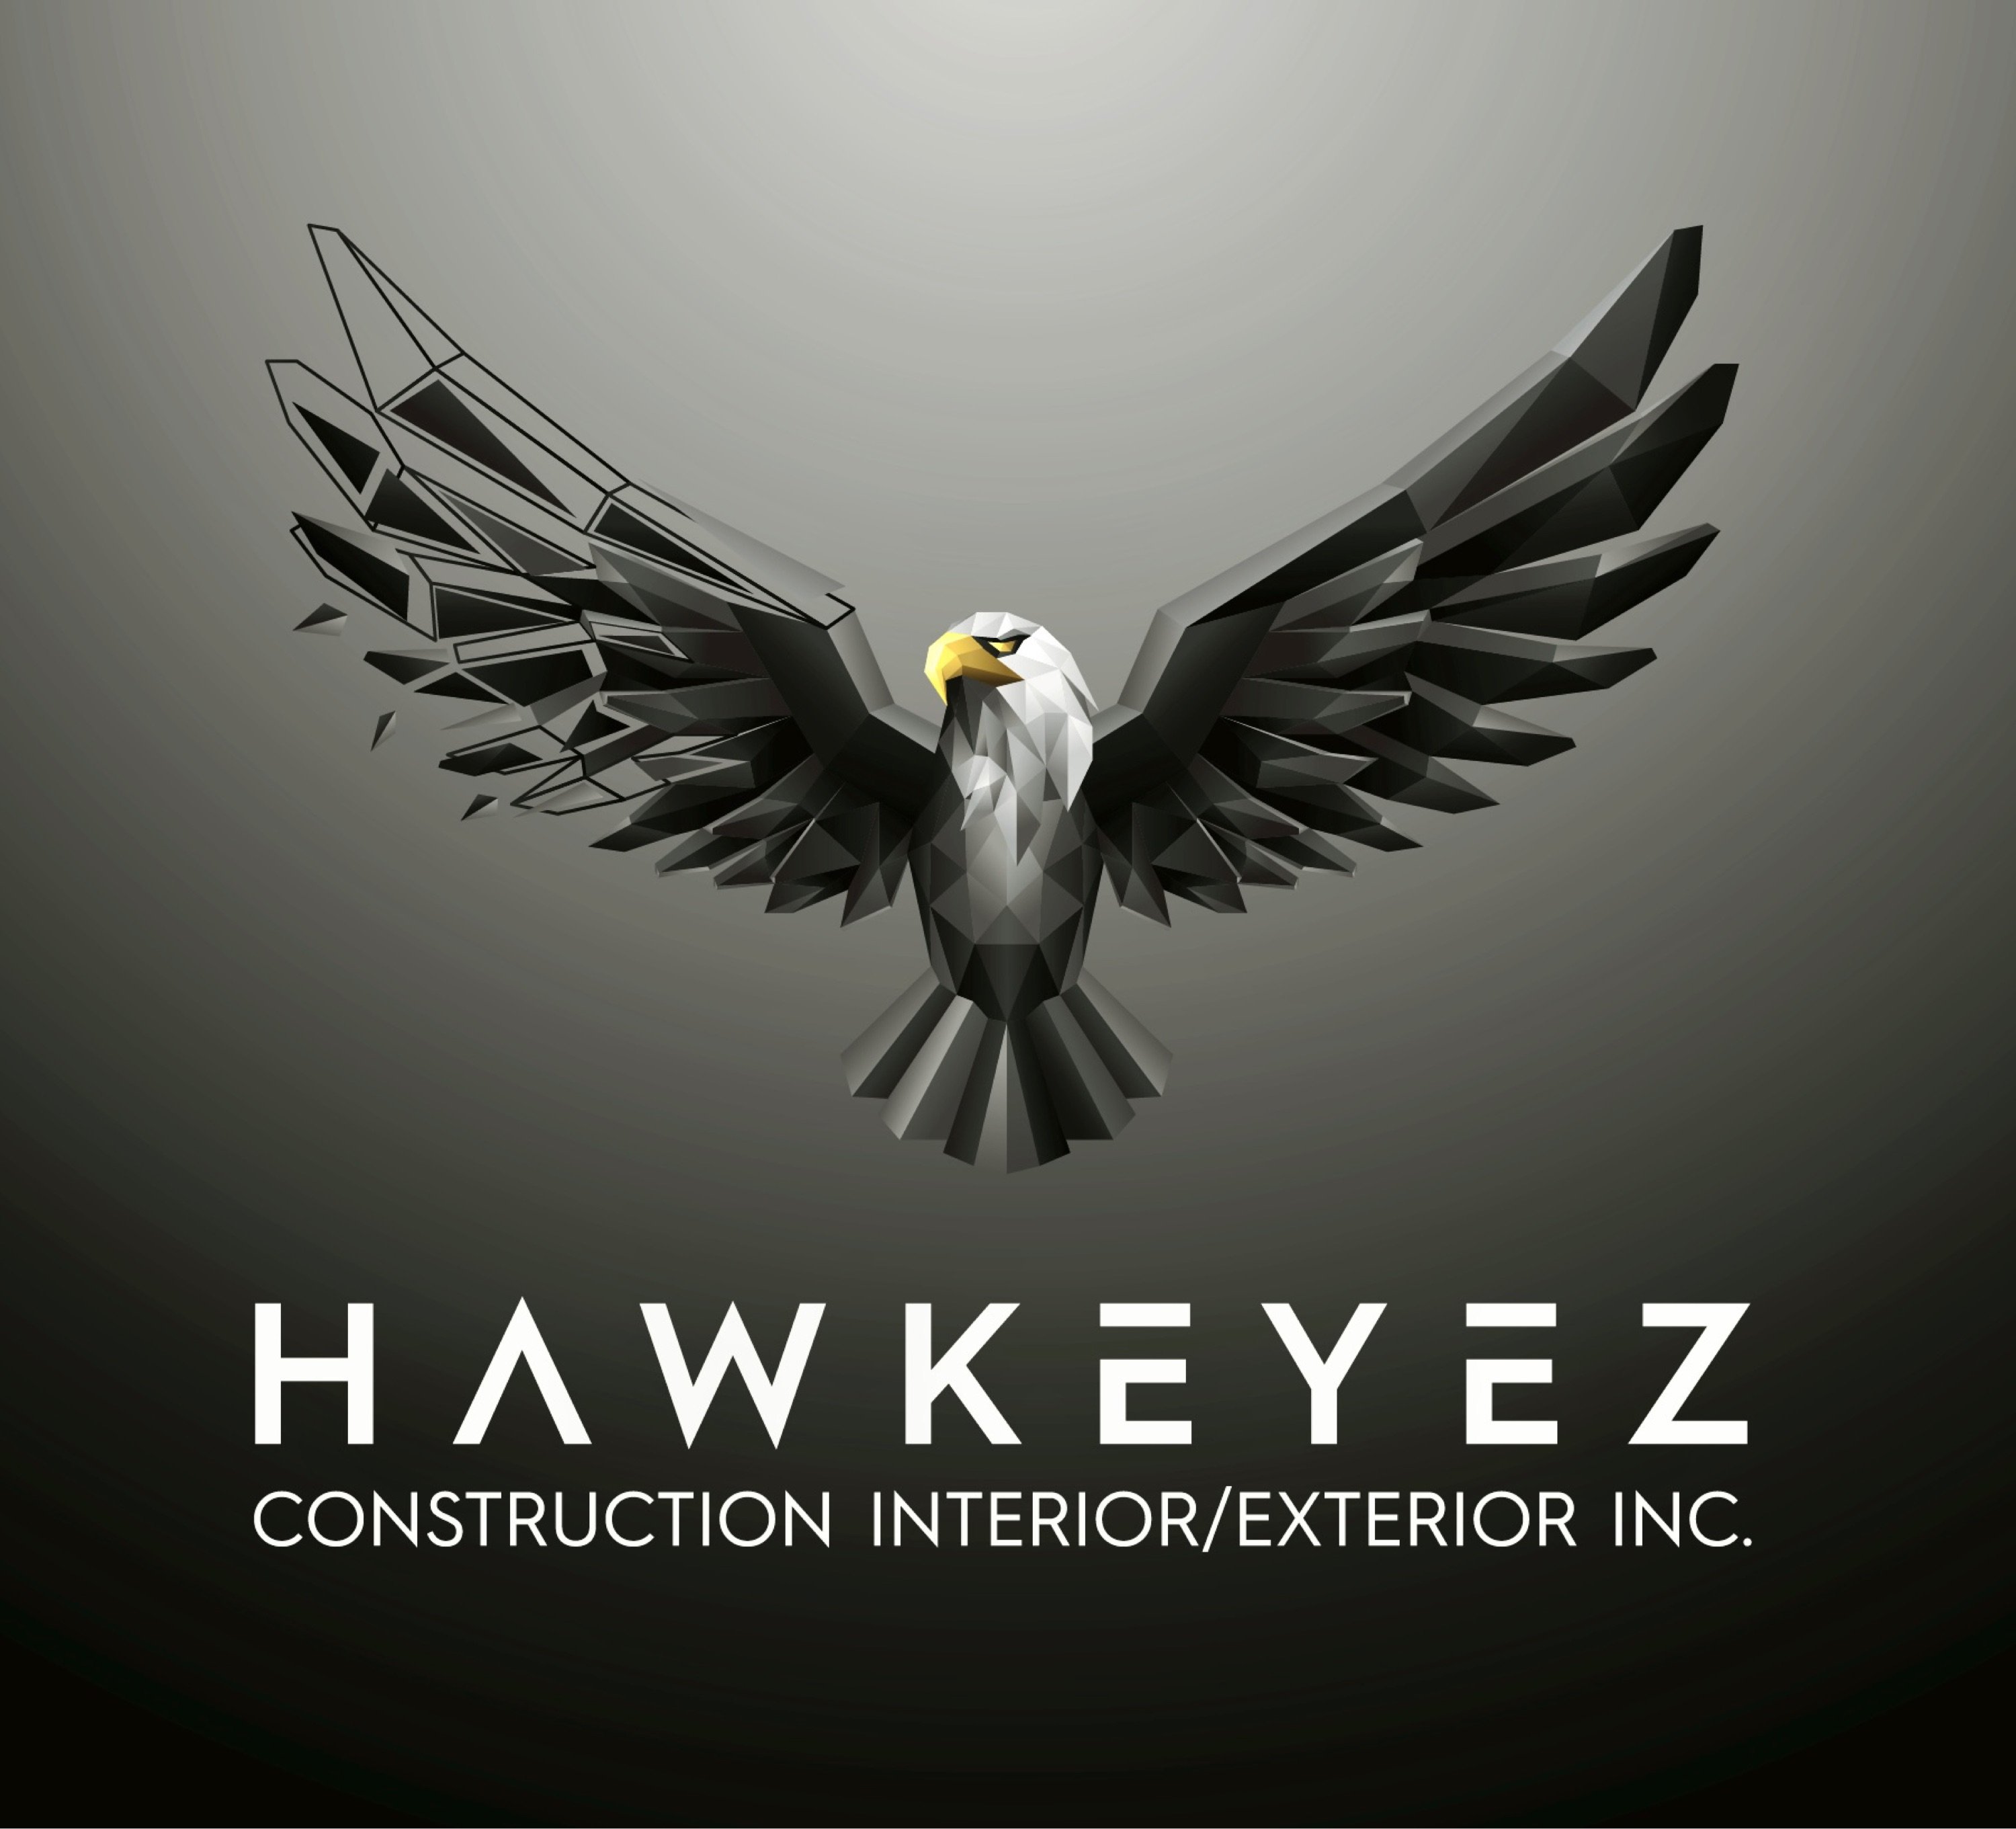 HAWKEYEZ CONSTRUCTION INTERIOR/EXTERIOR INC. Logo